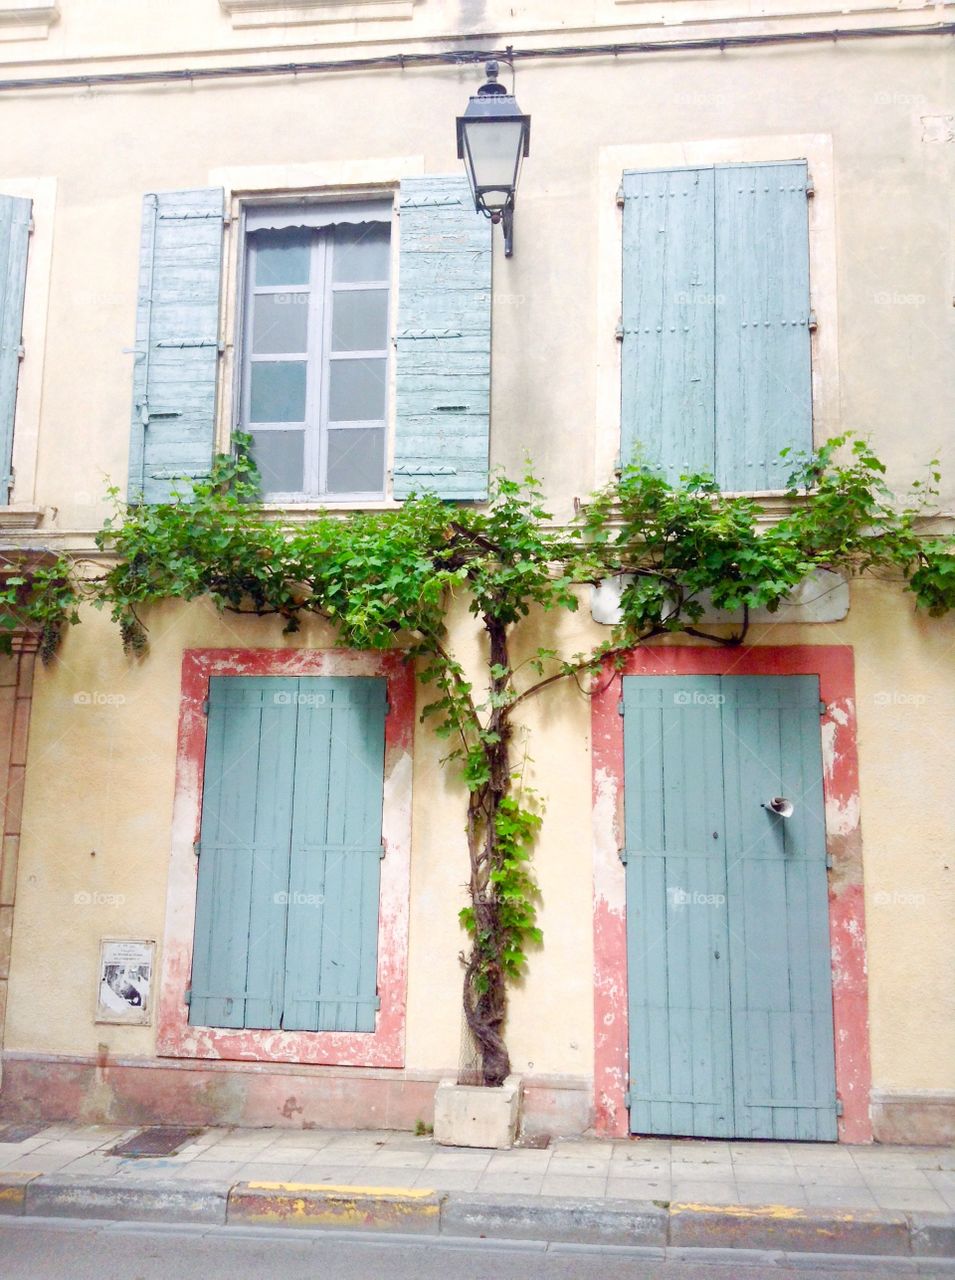 Lovely old house in Arles